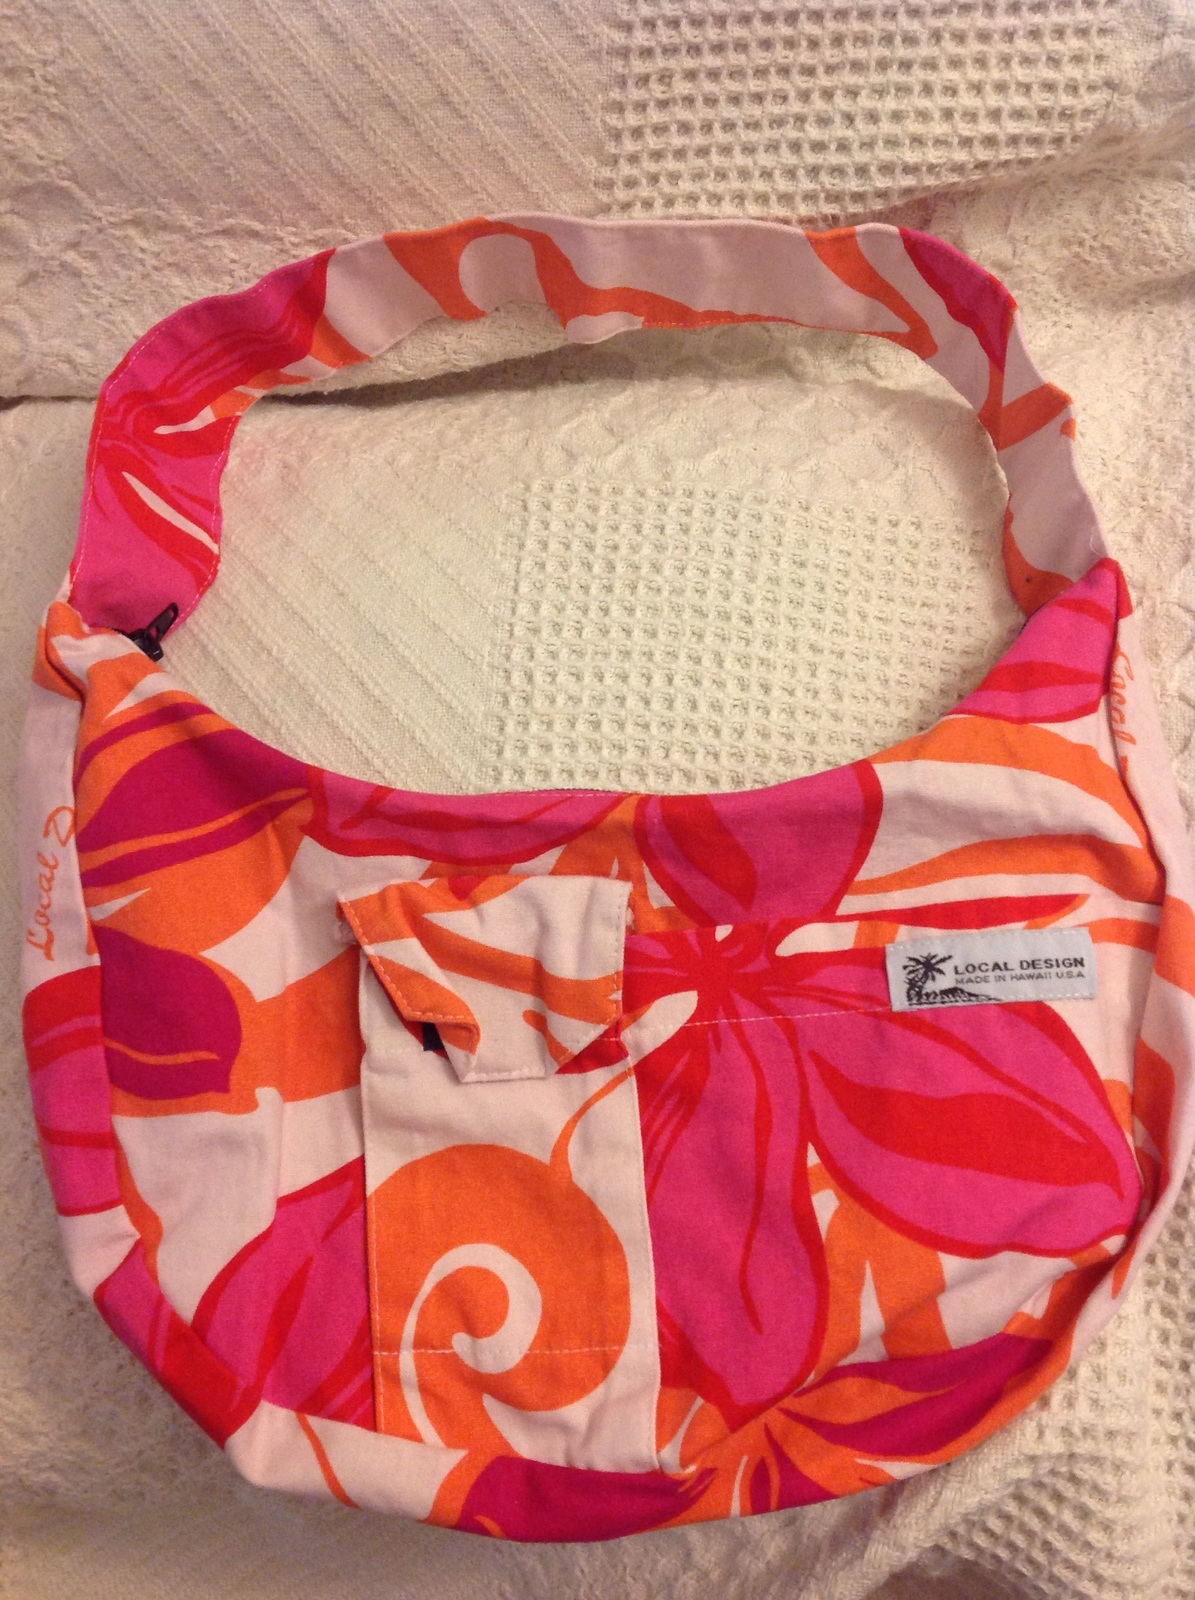 Local Design Made in Hawaii U.S.A. Hand Hobo Bag Red, Pink, Orange - Handbags & Purses